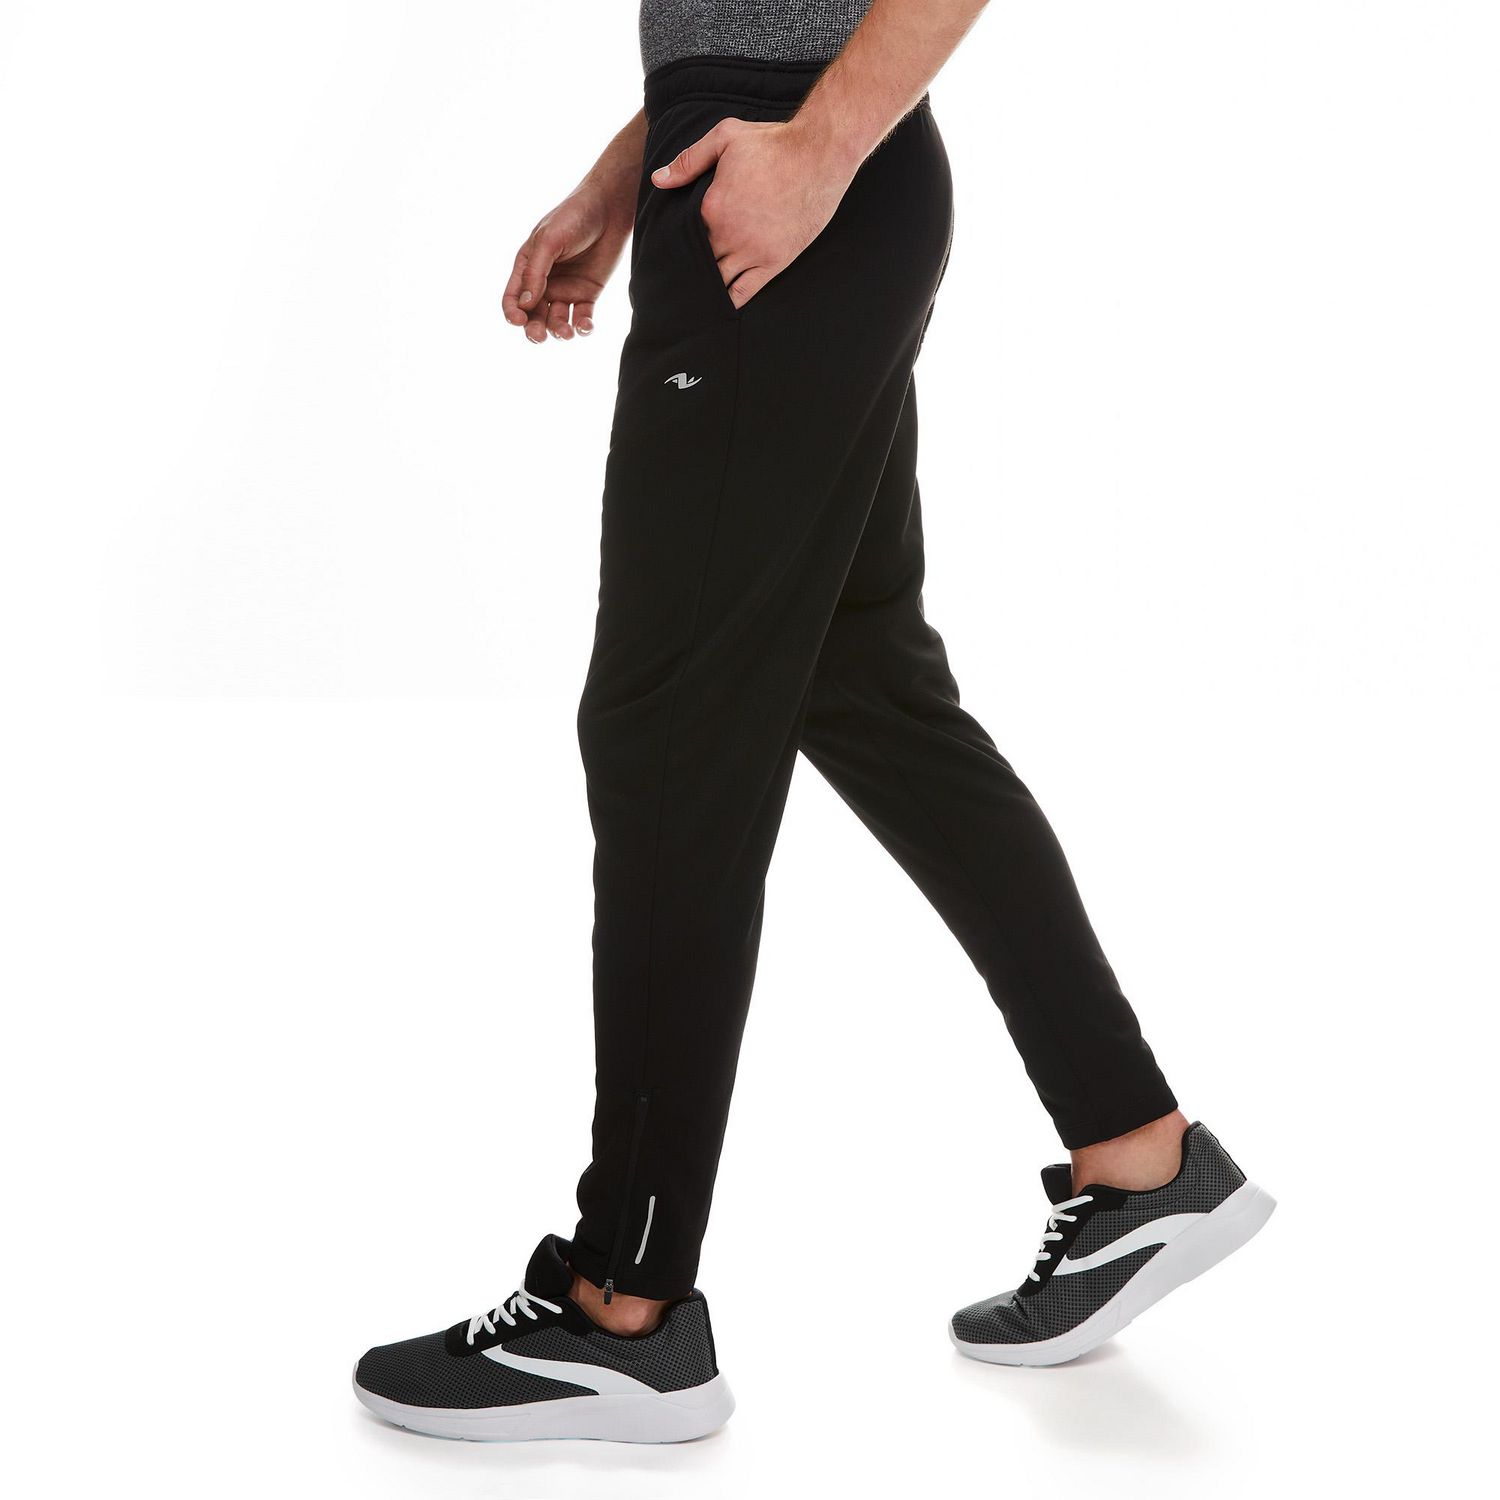 Athletic Works Black Active Pants Size M - 31% off